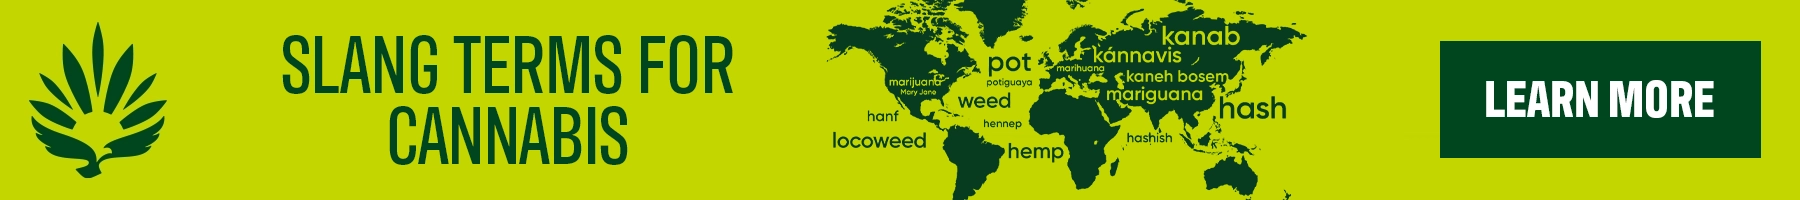 Slang terms for cannabis